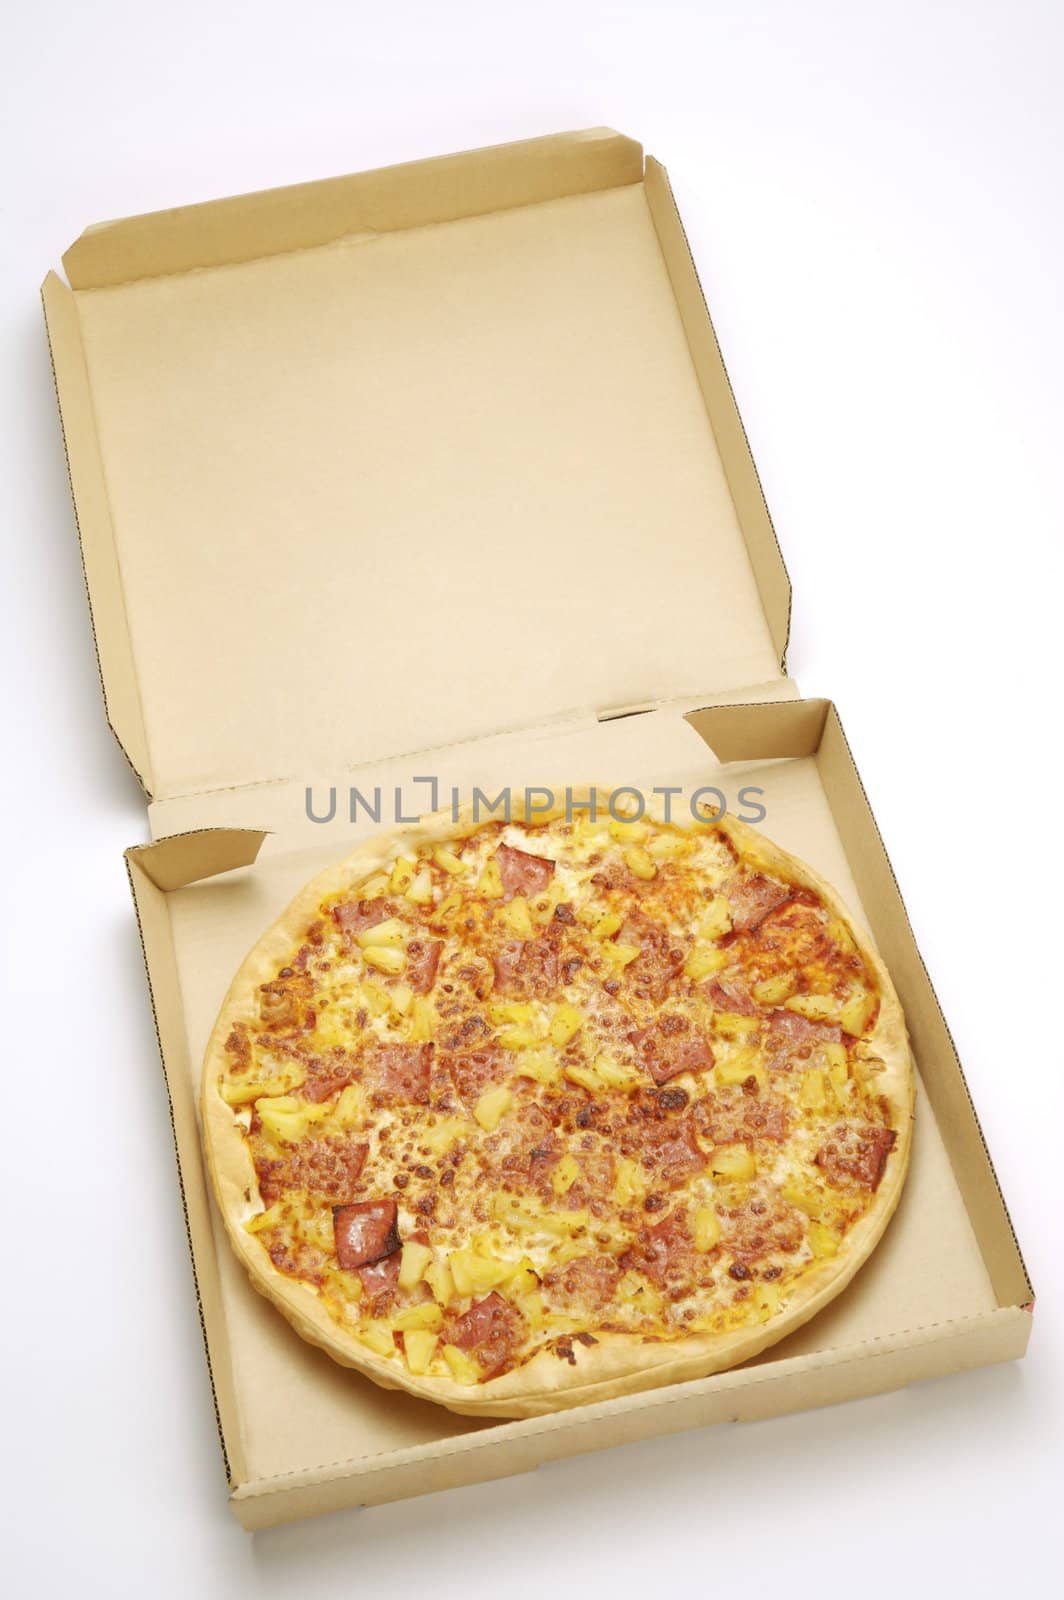 Pizza in a cardboard box by Baltus